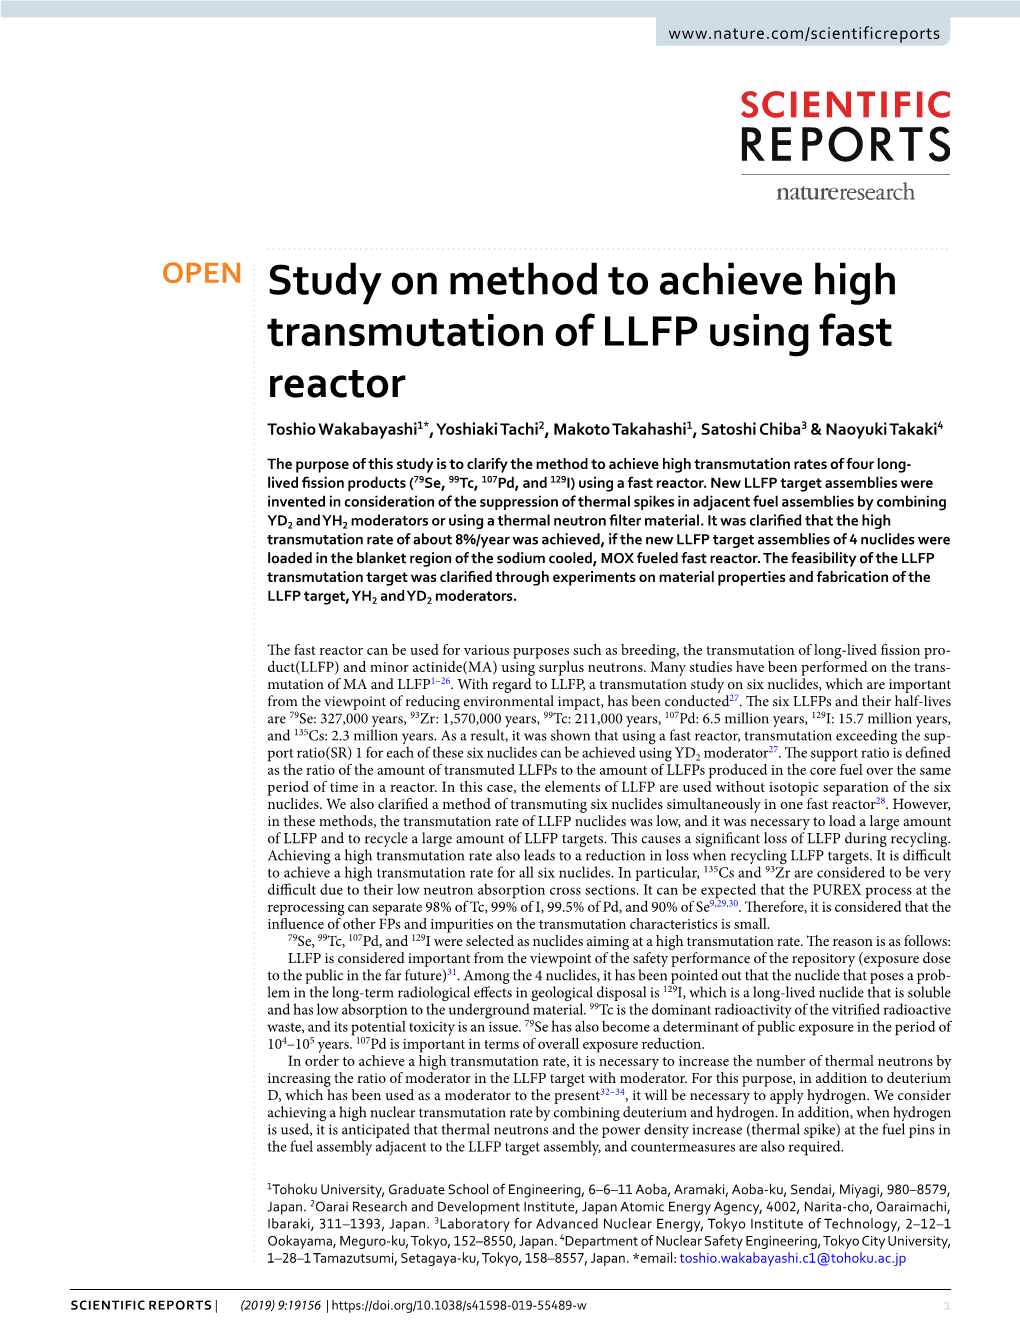 Study on Method to Achieve High Transmutation of LLFP Using Fast Reactor Toshio Wakabayashi1*, Yoshiaki Tachi2, Makoto Takahashi1, Satoshi Chiba3 & Naoyuki Takaki4